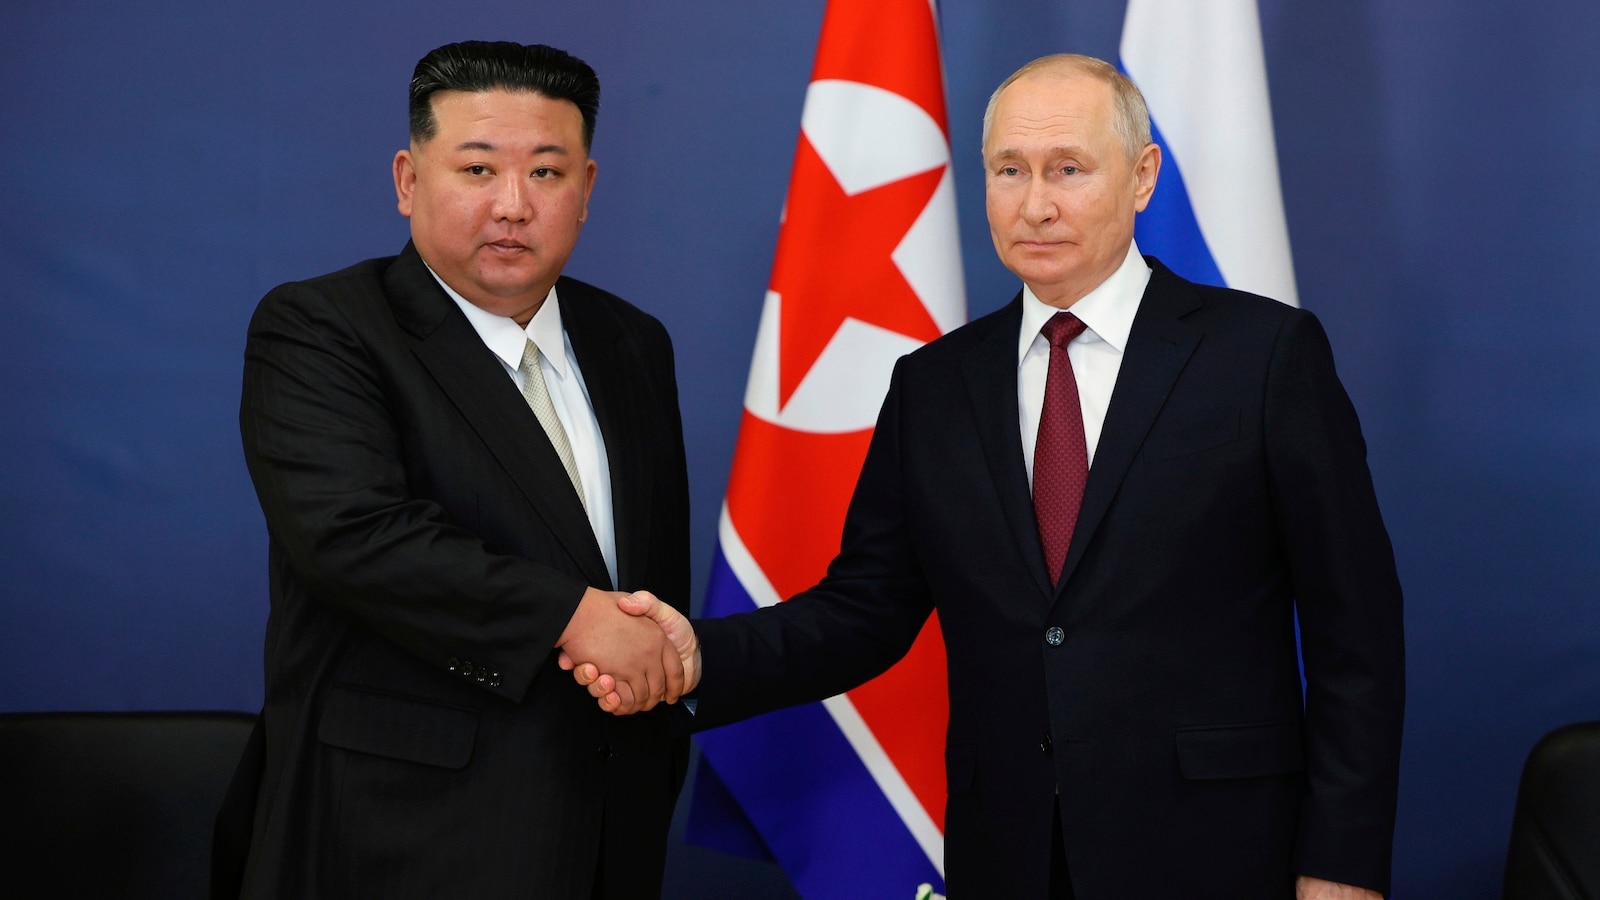 Kremlin announces Putin's upcoming diplomatic visit to North Korea to meet with Kim